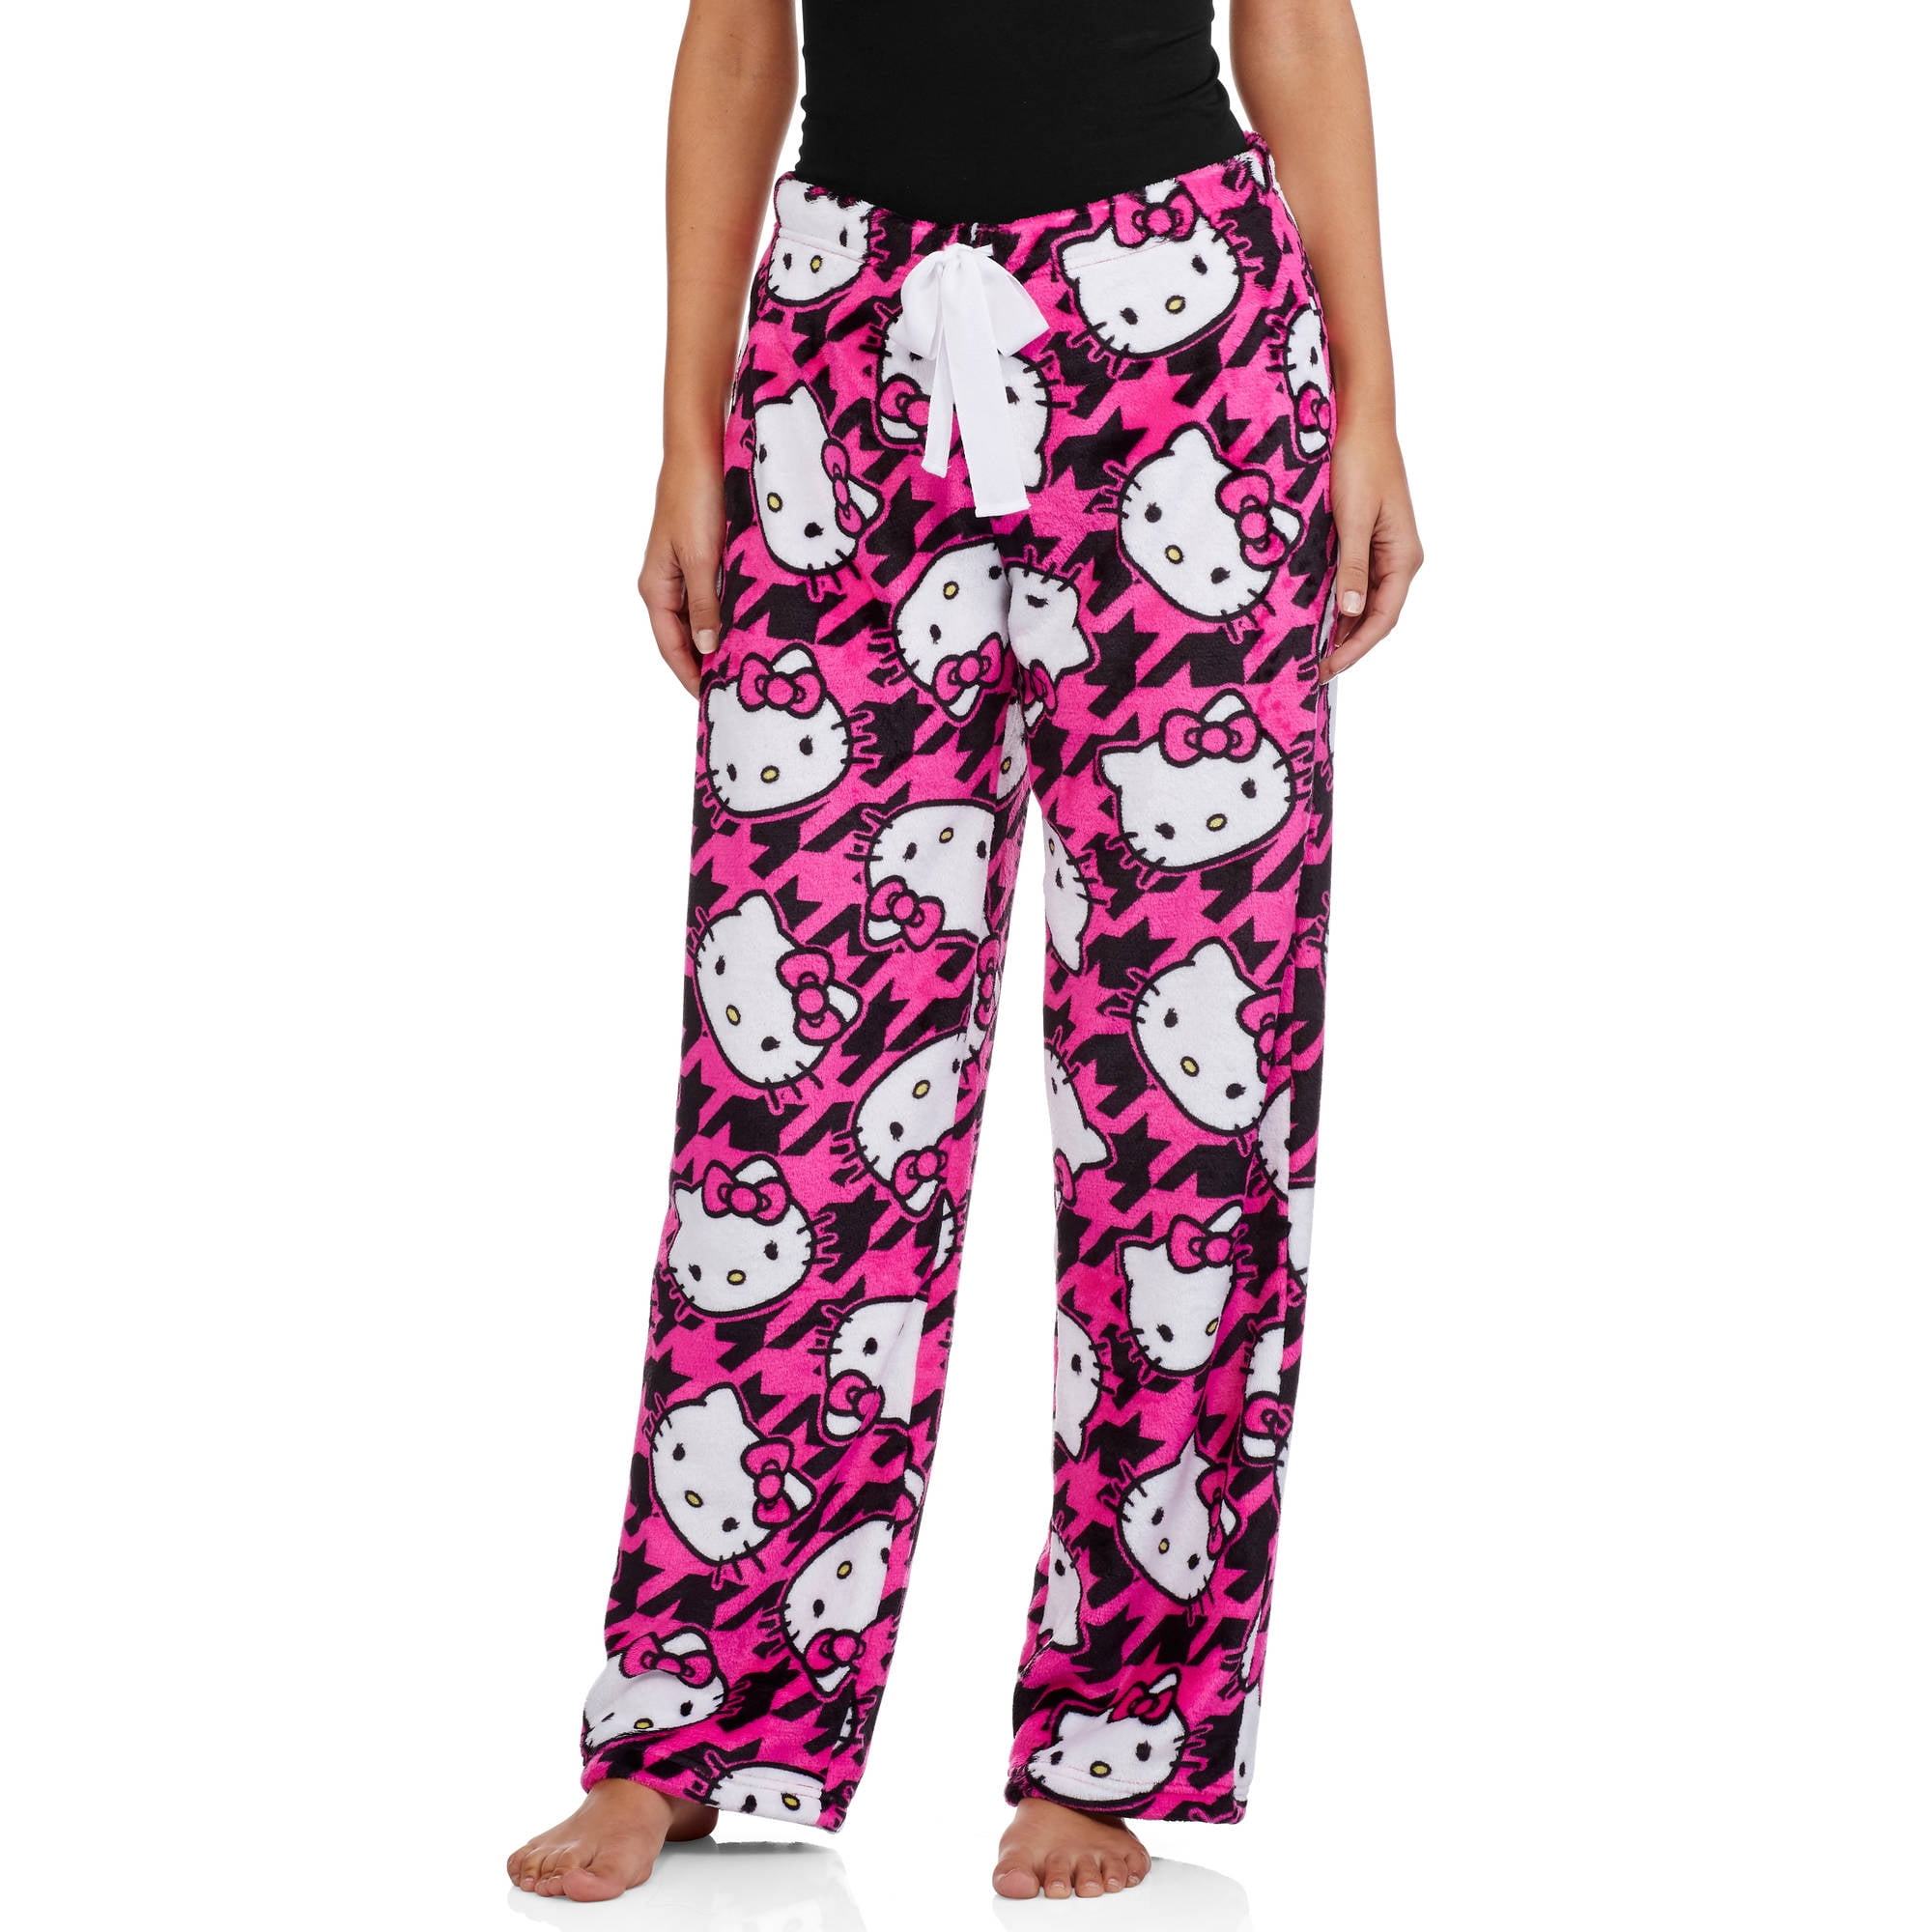 Hanes Women's X-Temp Thermal Underwear Pant - Walmart.com